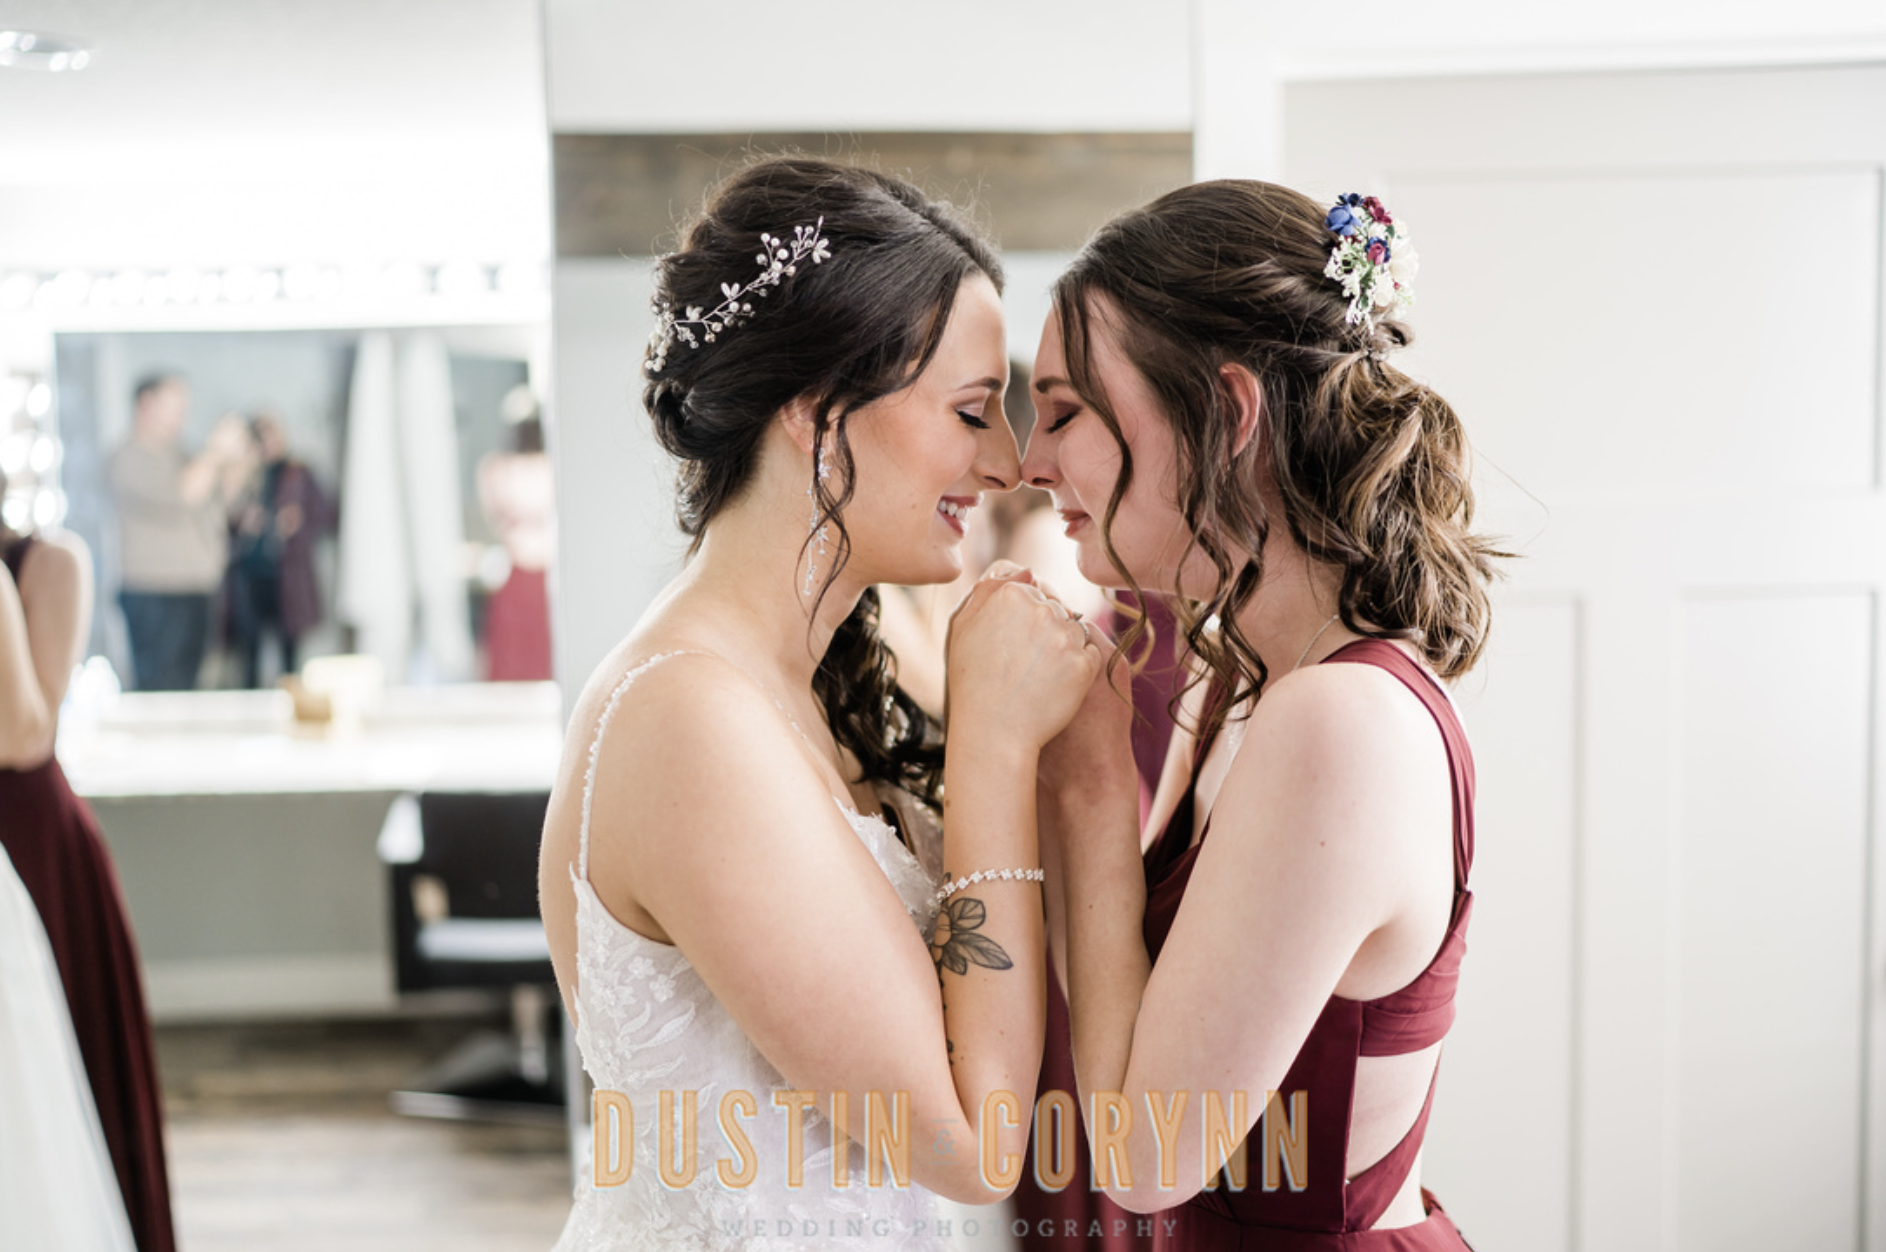 Fort Wayne wedding photographer captures bride embracing bridesmaid